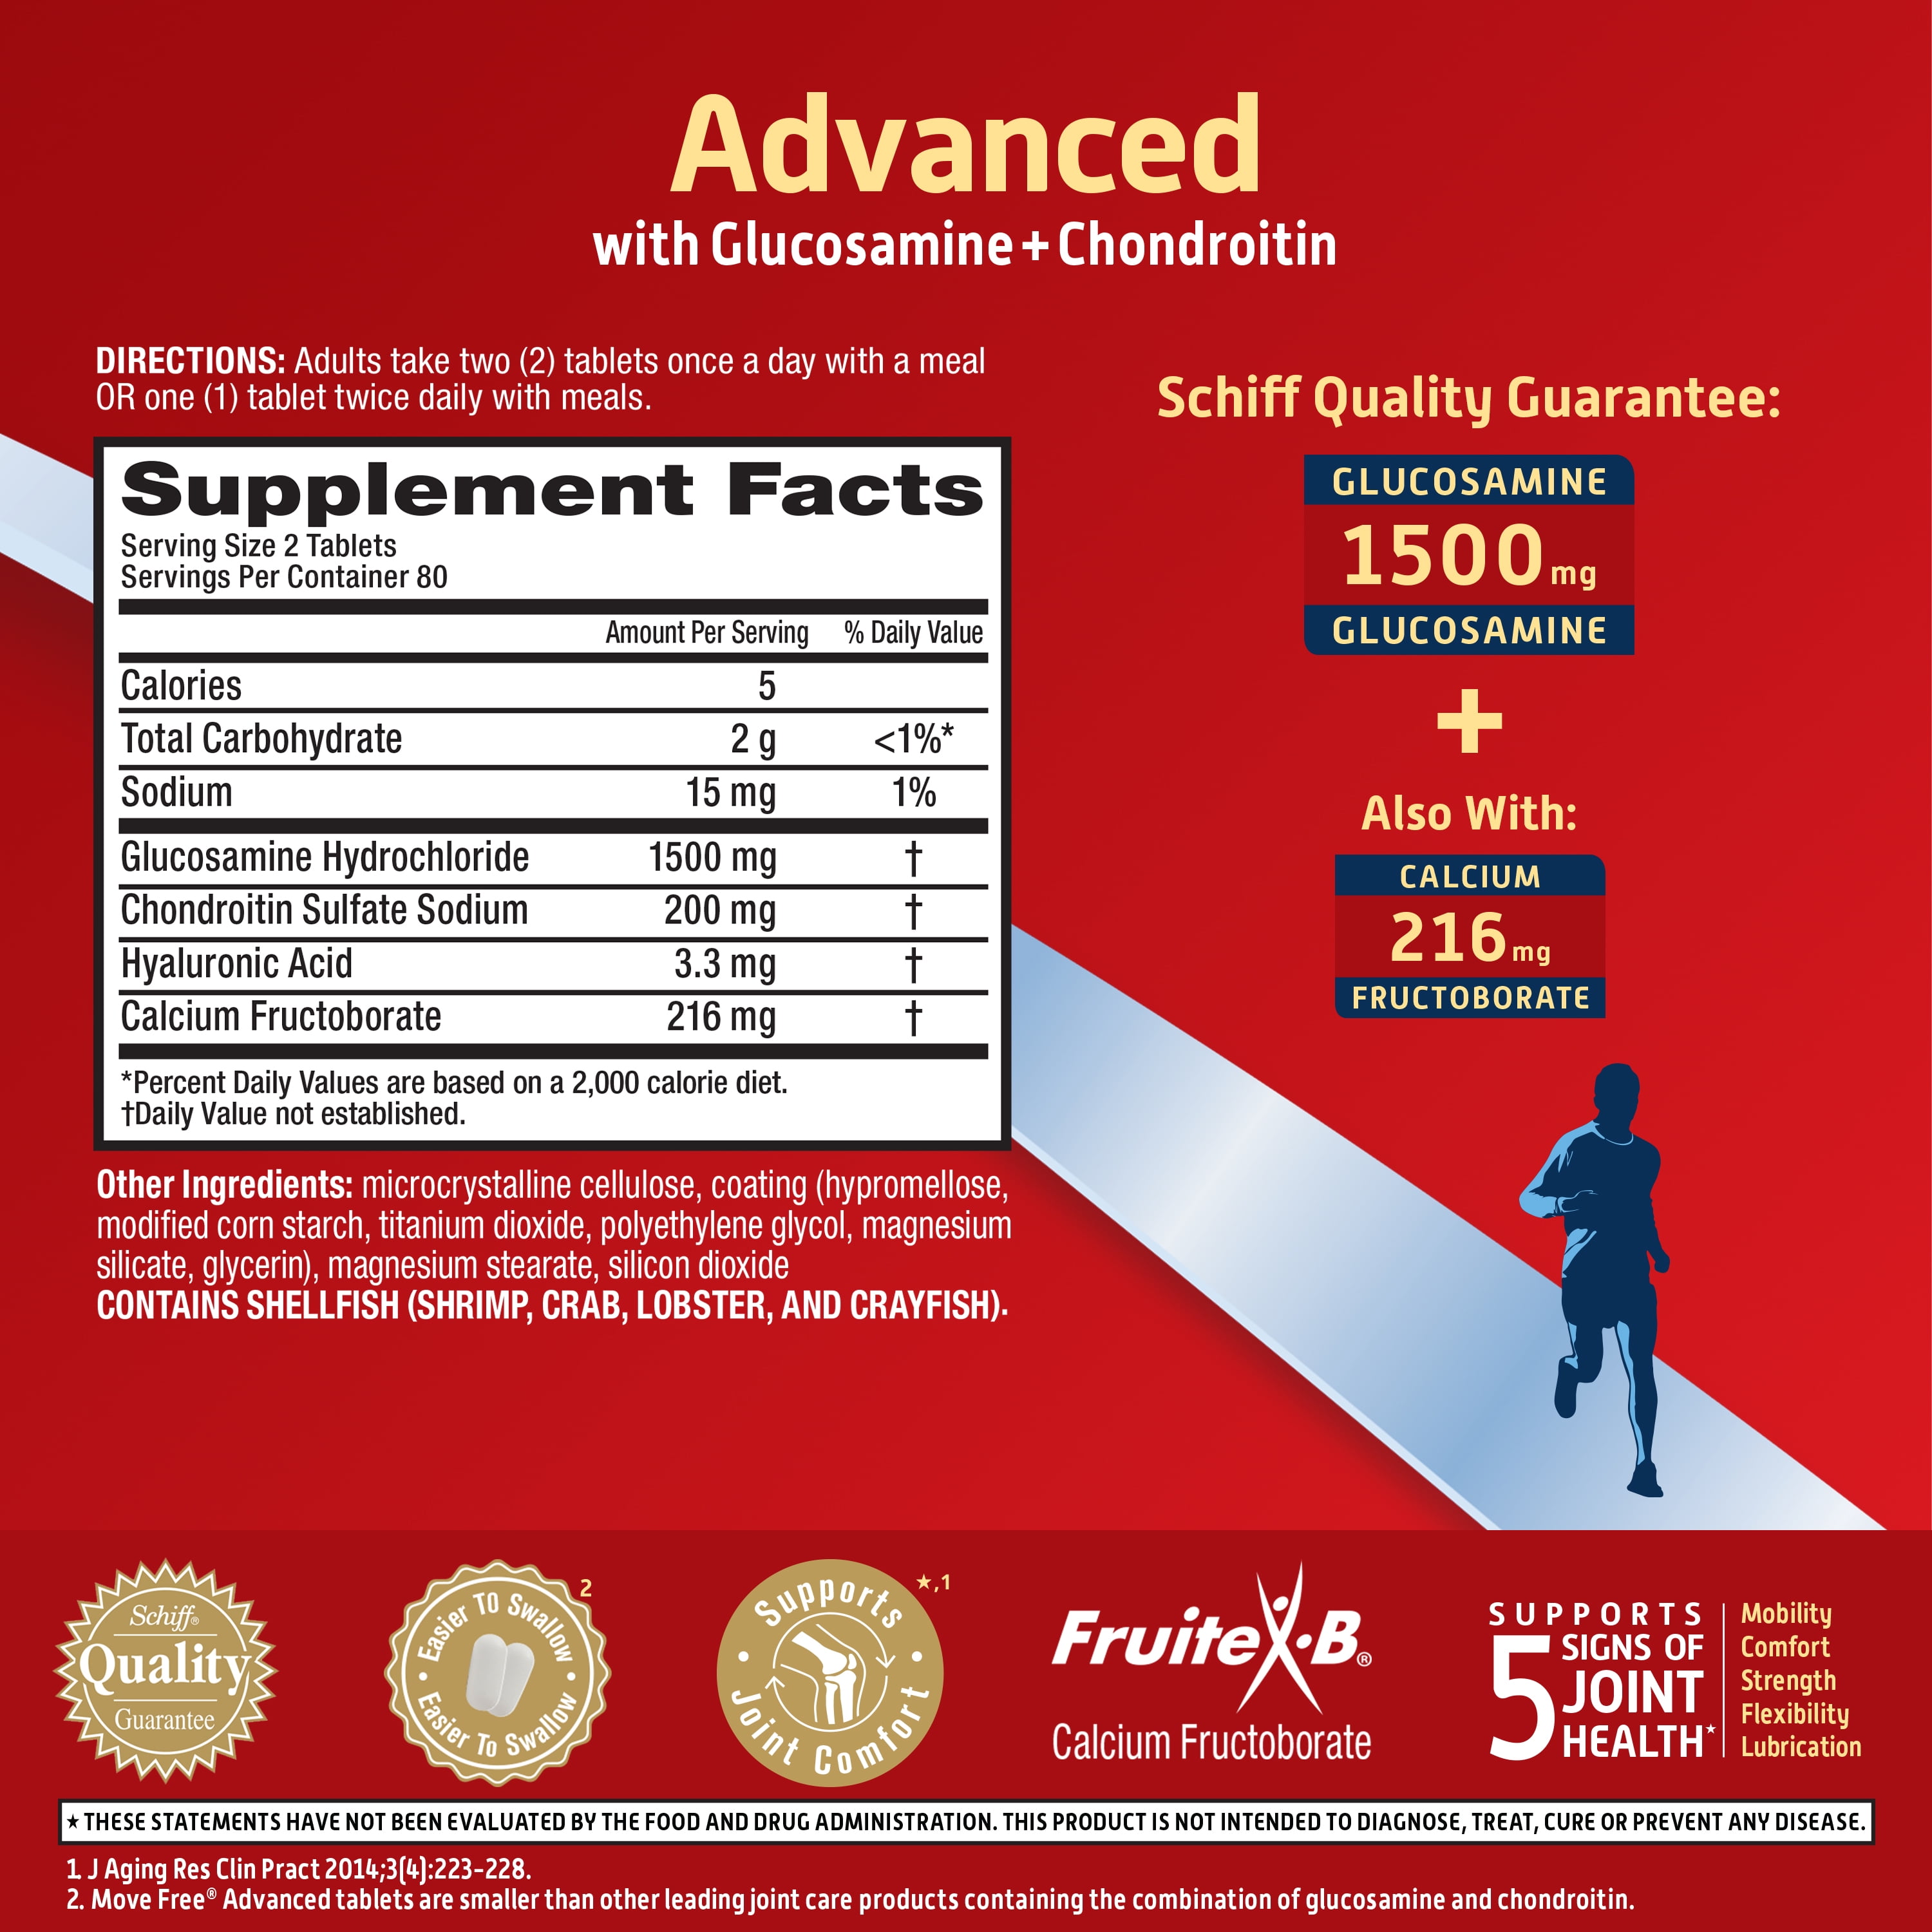 Move Free Advanced Glucosamine Chondroitin Tablets 160 Count Box Joint Health Supplement Walmart Com Walmart Com